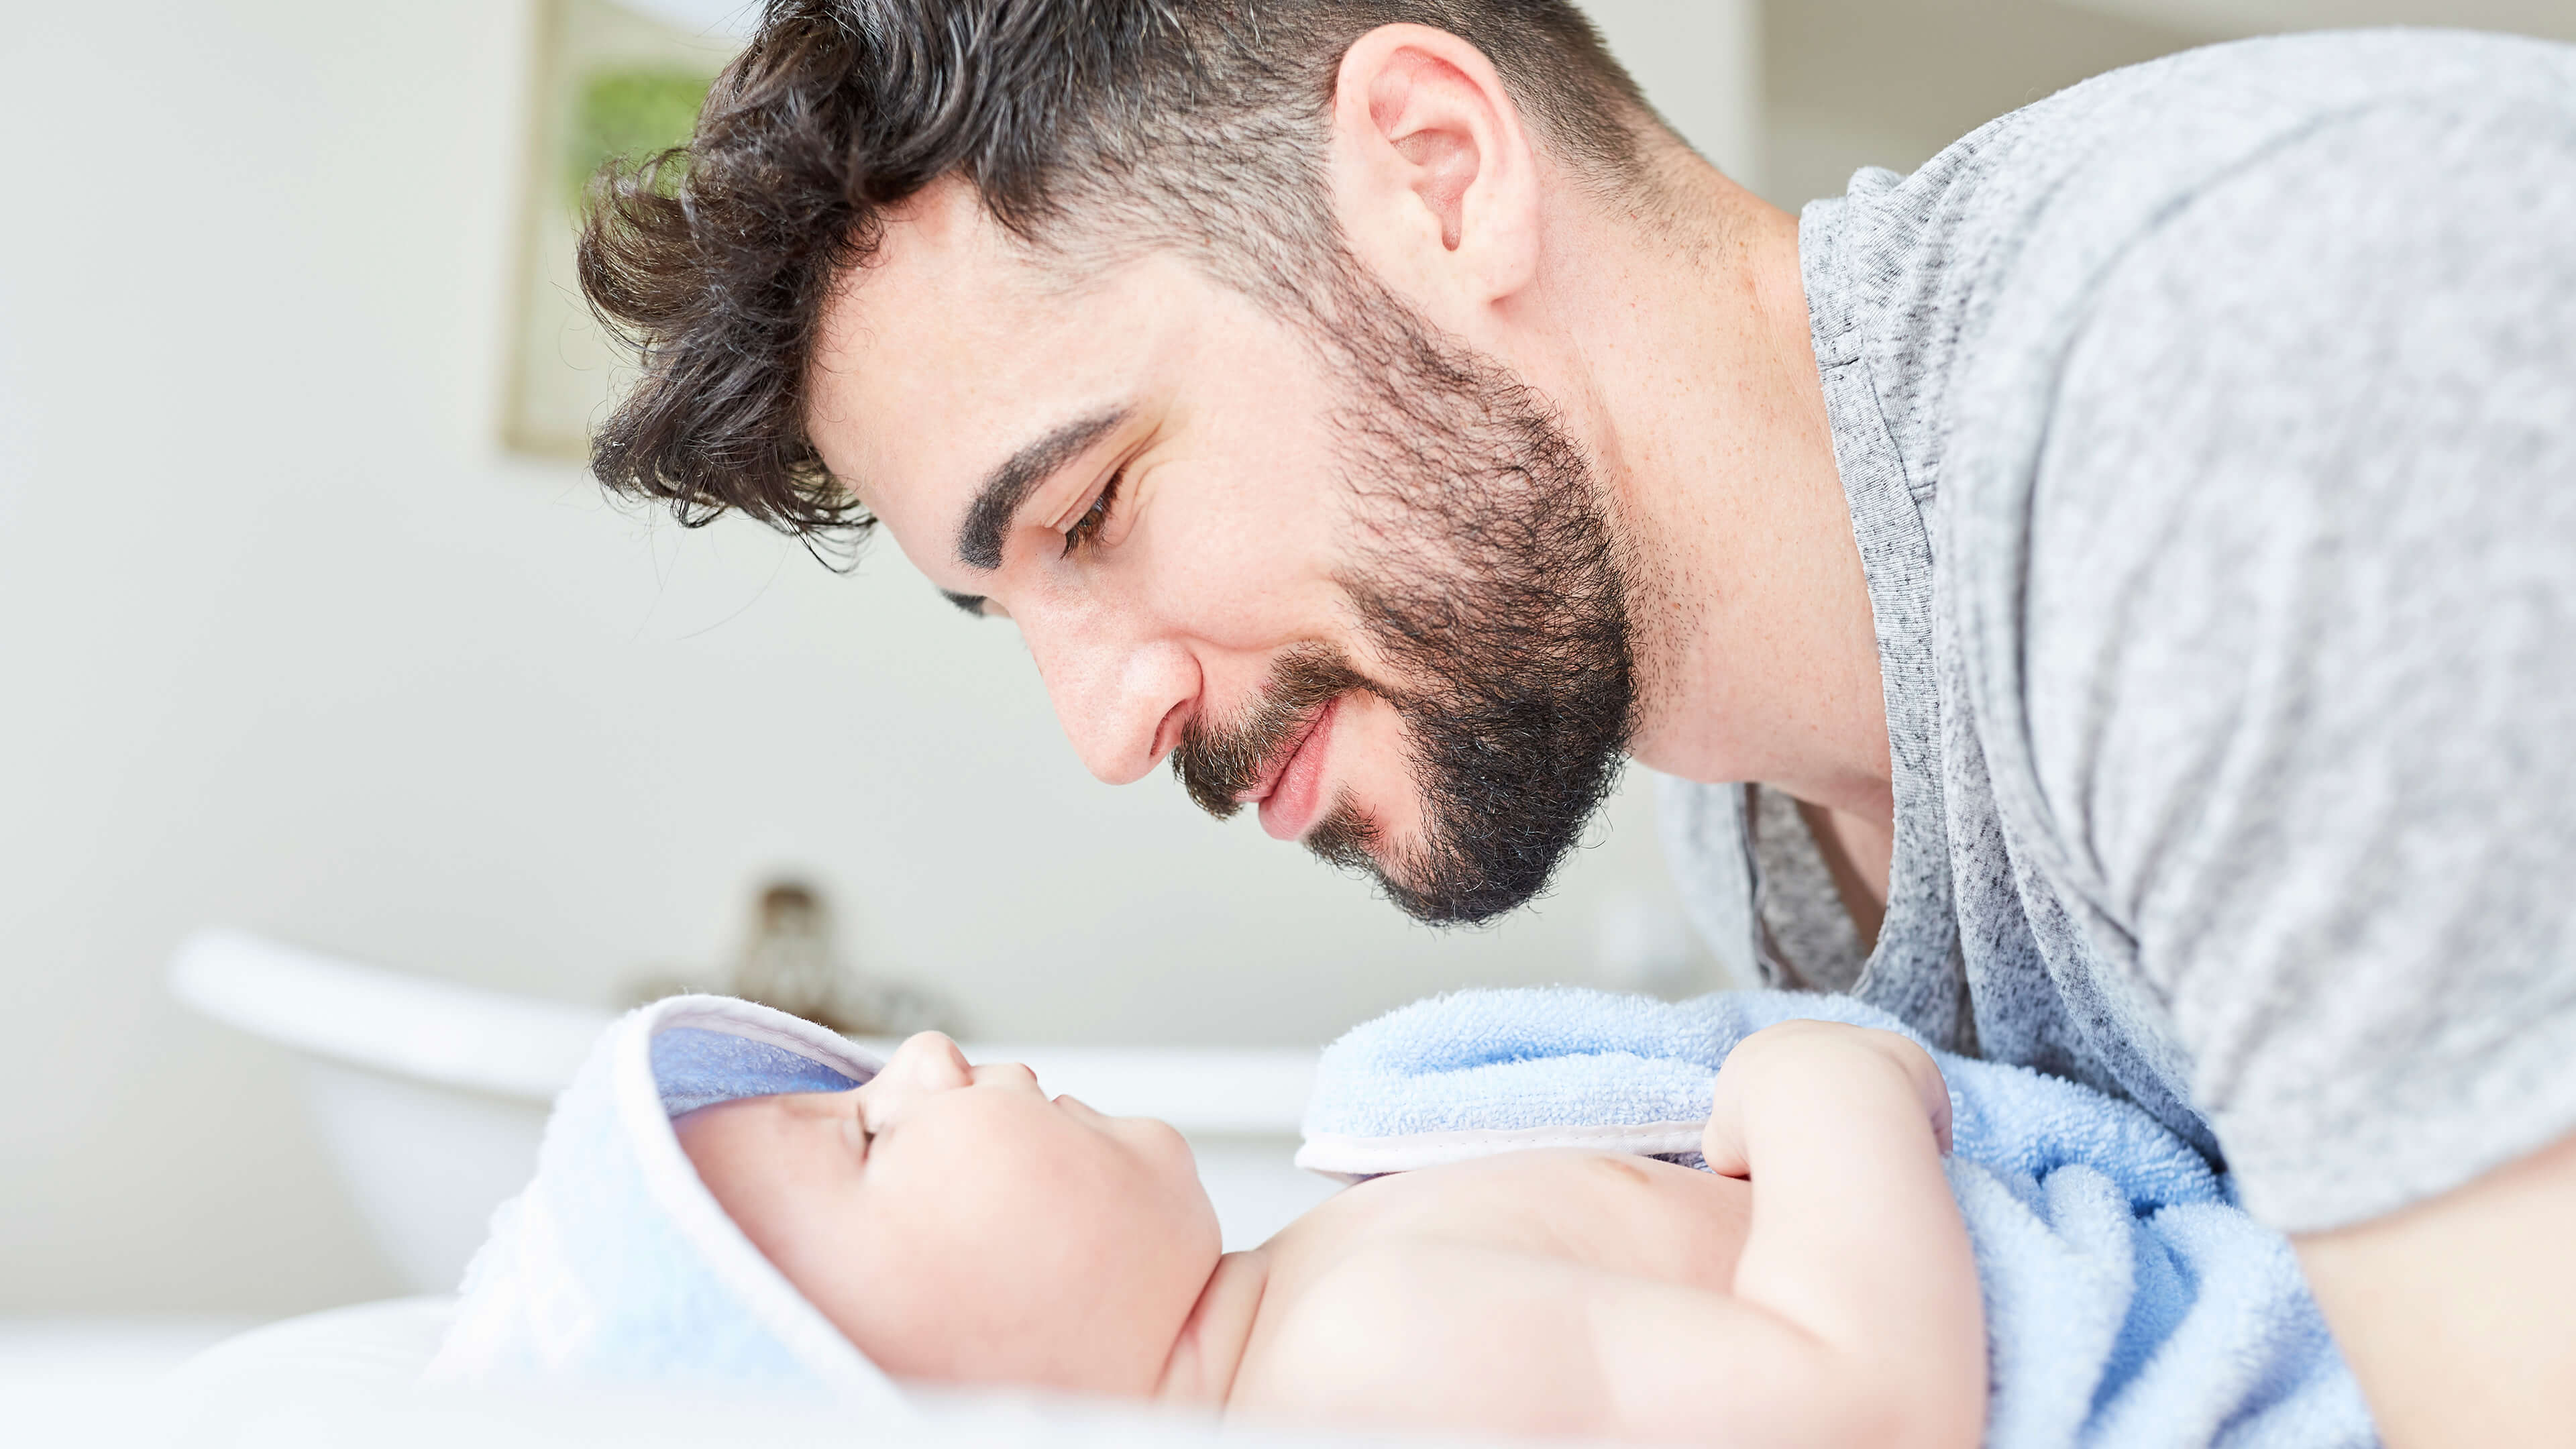 how often do you bathe a newborn baby